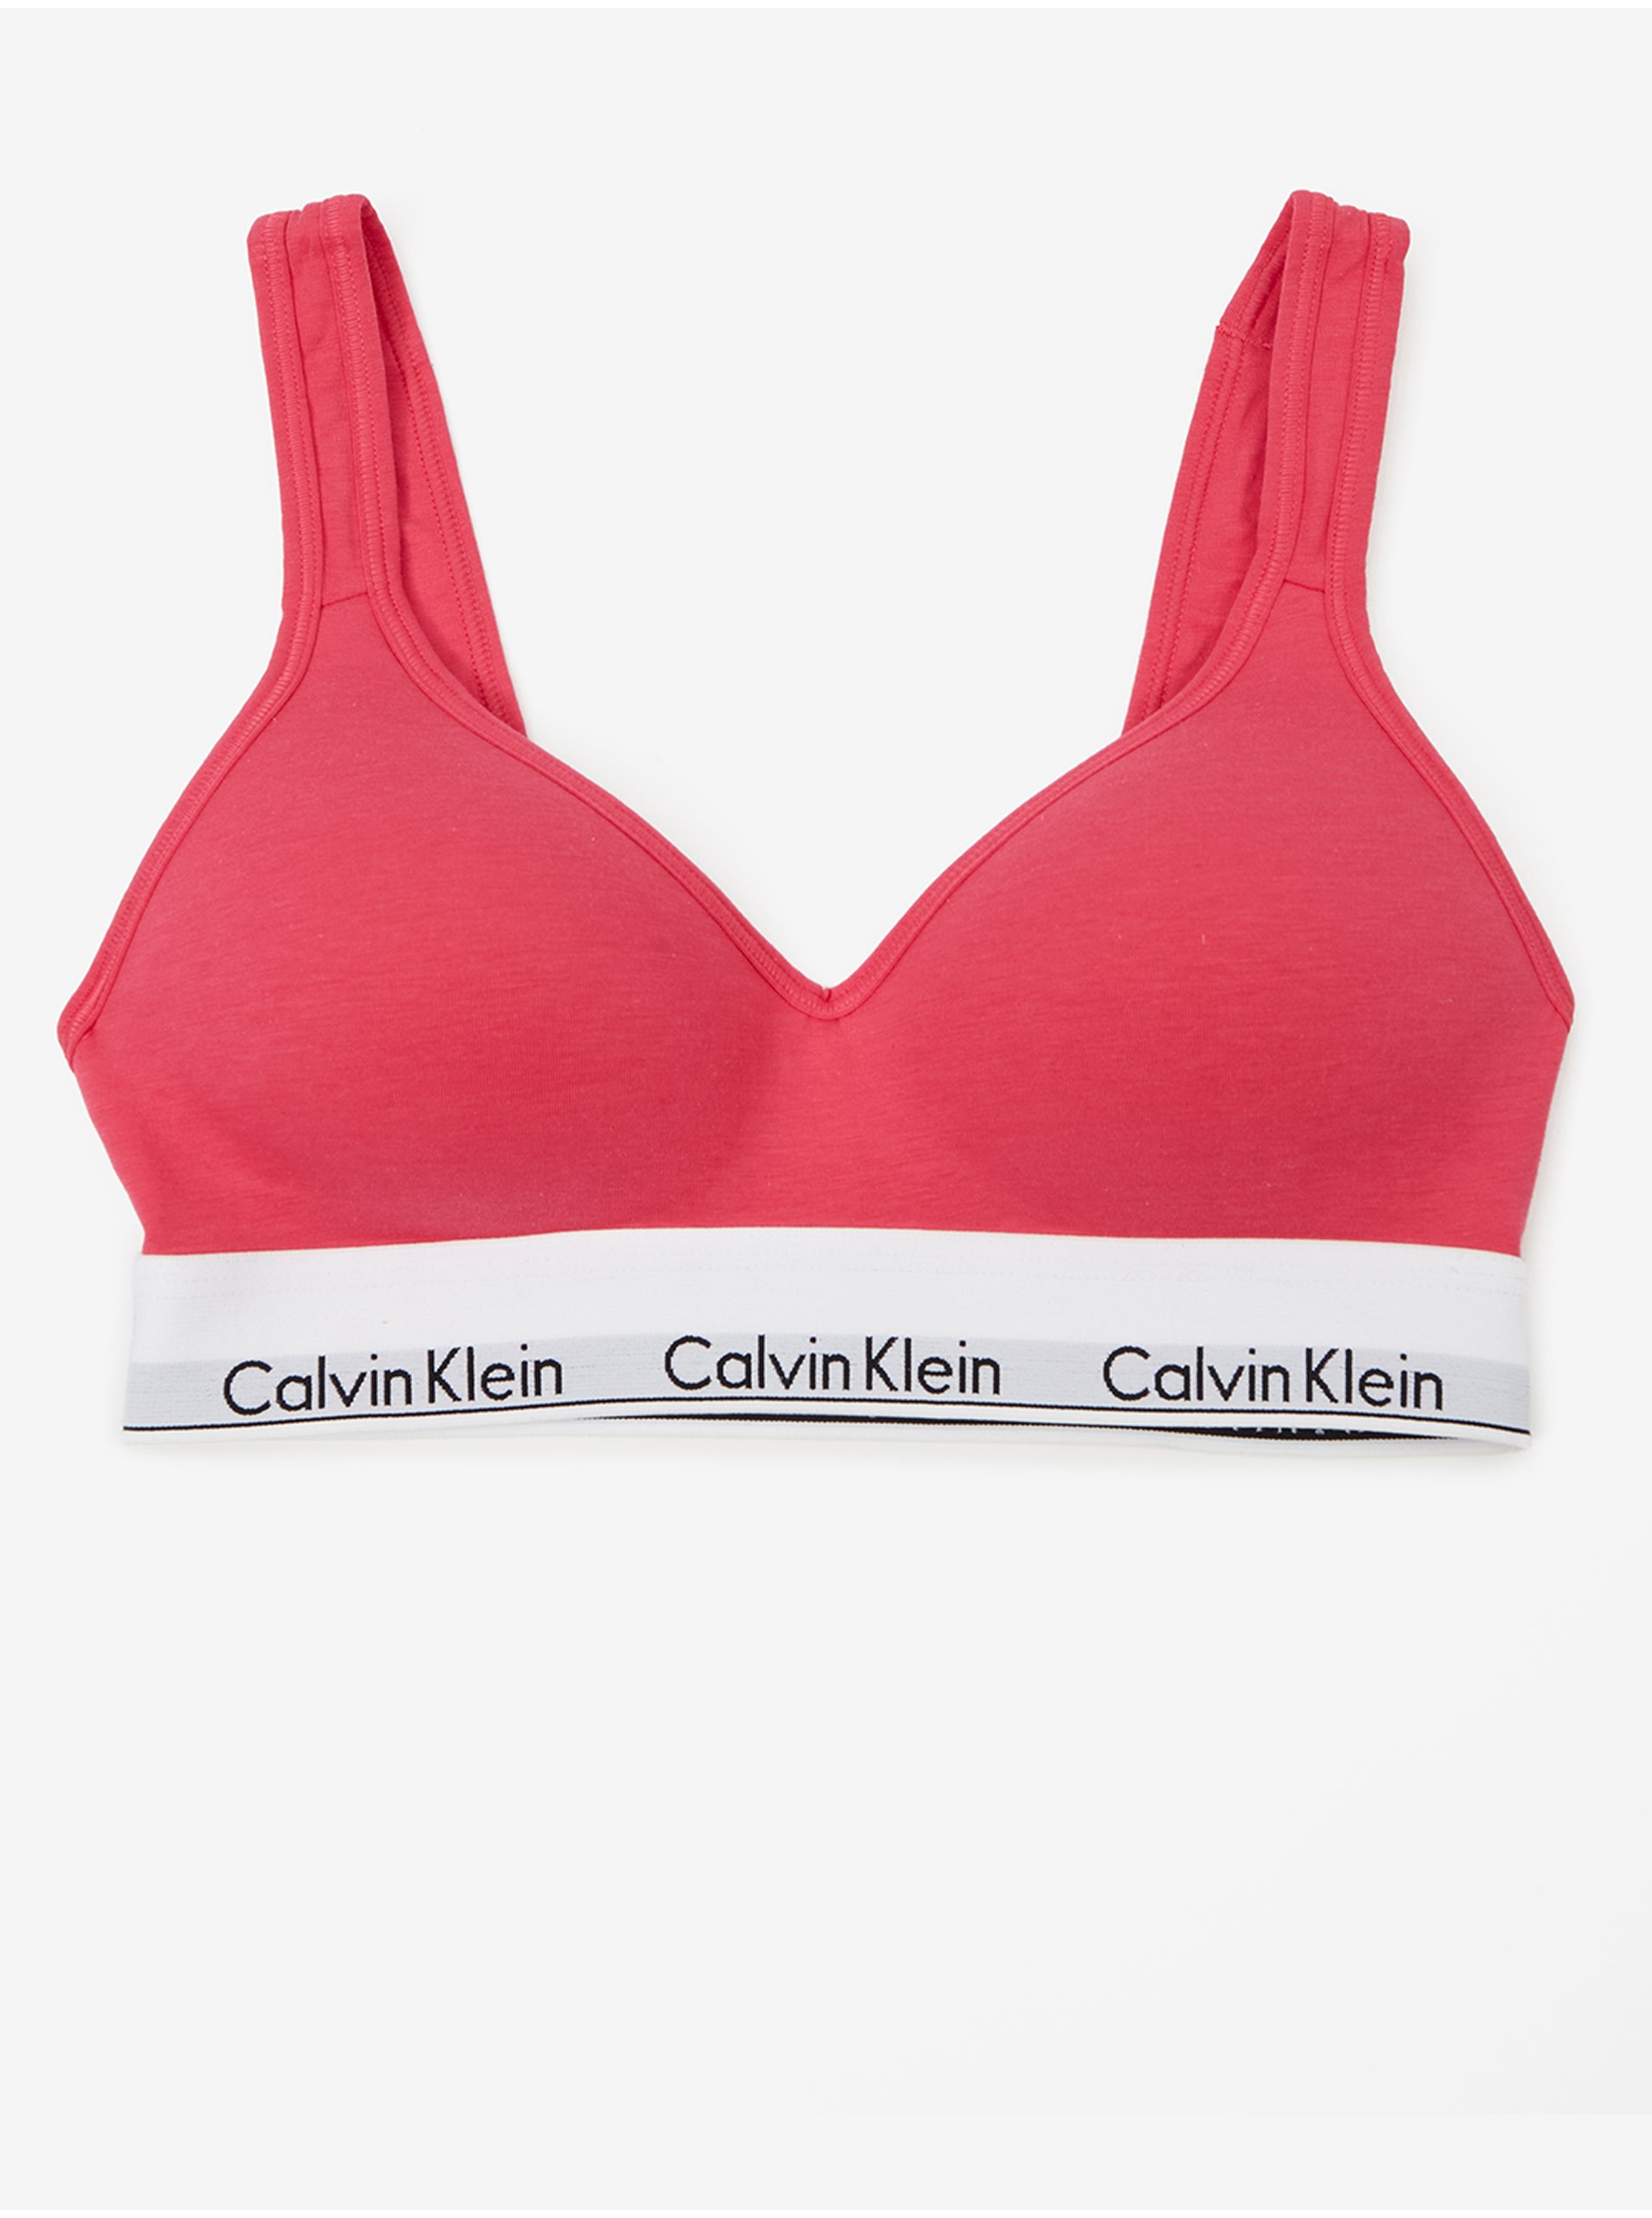 Lacno Podprsenky pre ženy Calvin Klein - tmavoružová